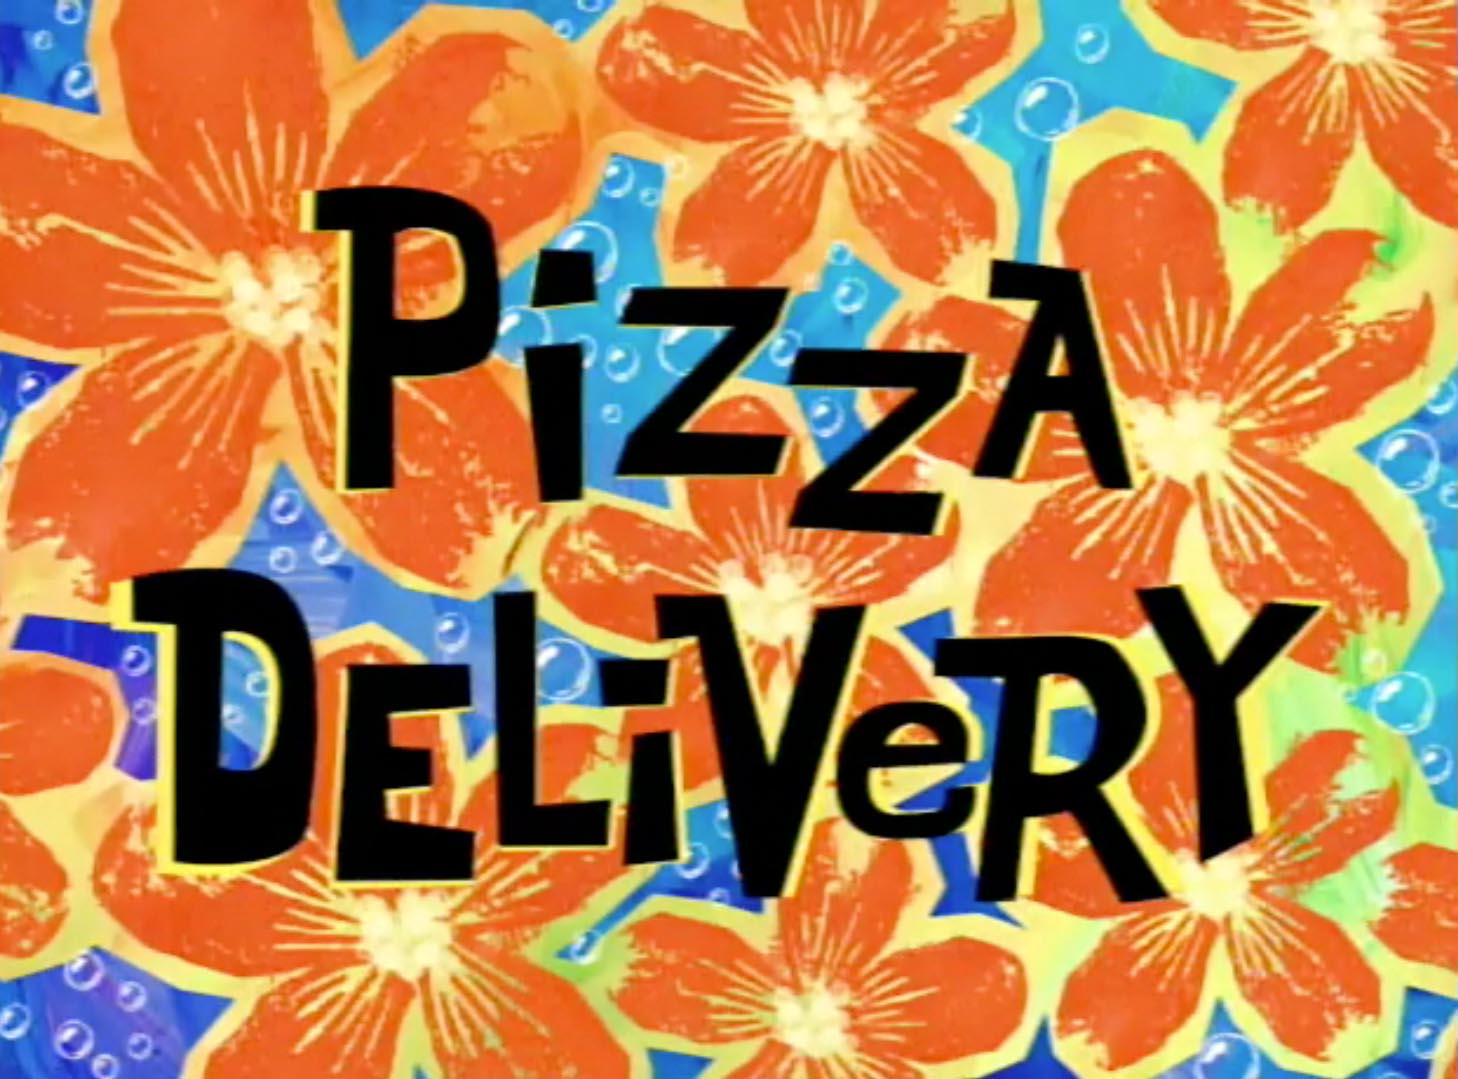 Pizza Delivery - Encyclopedia SpongeBobia - The SpongeBob SquarePants Wiki